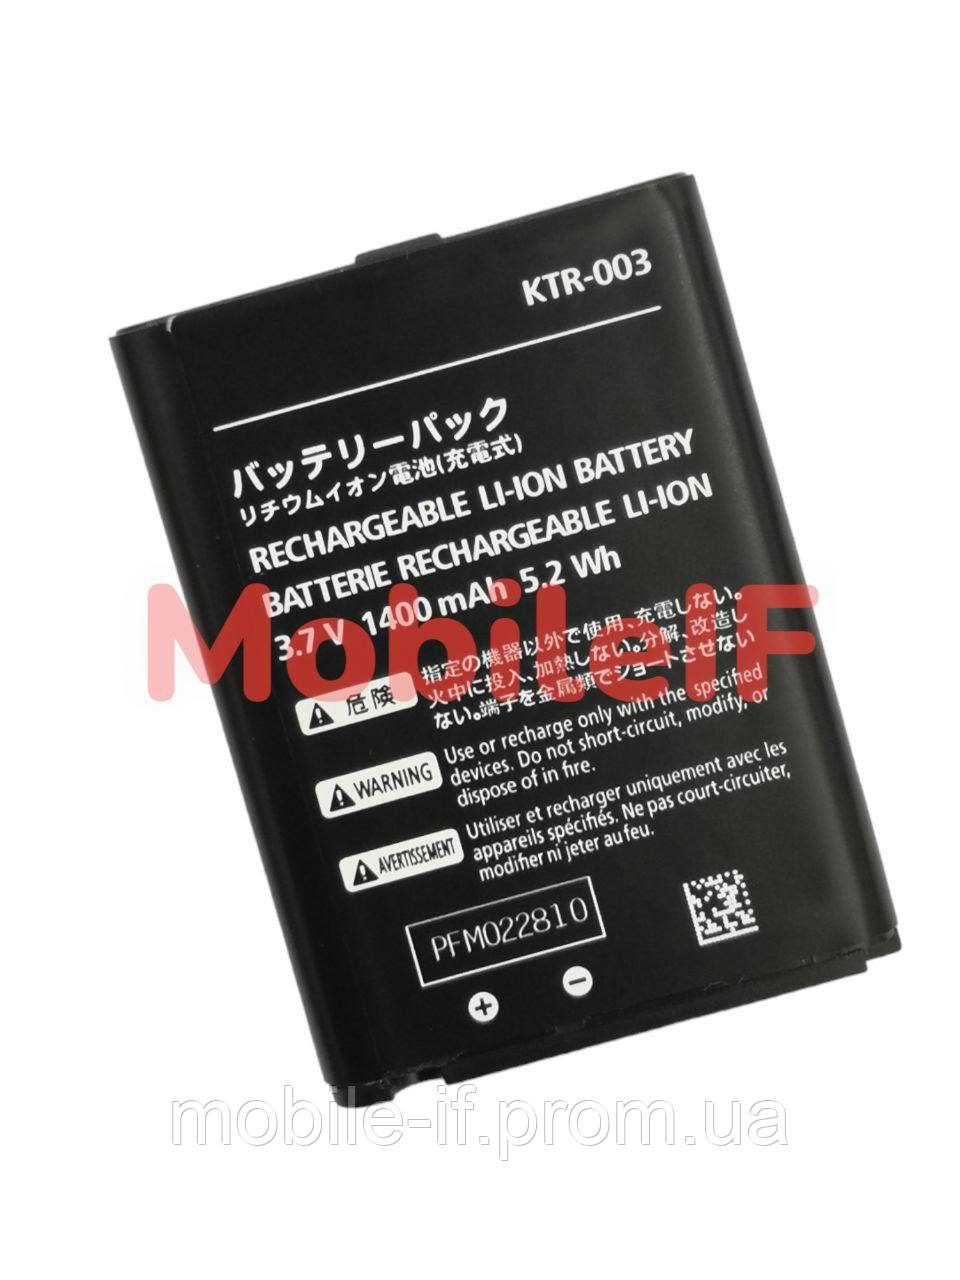 Акумулятор Батарея Nintendo New 3DS, NN3DS, KTR-003, 1400mAh